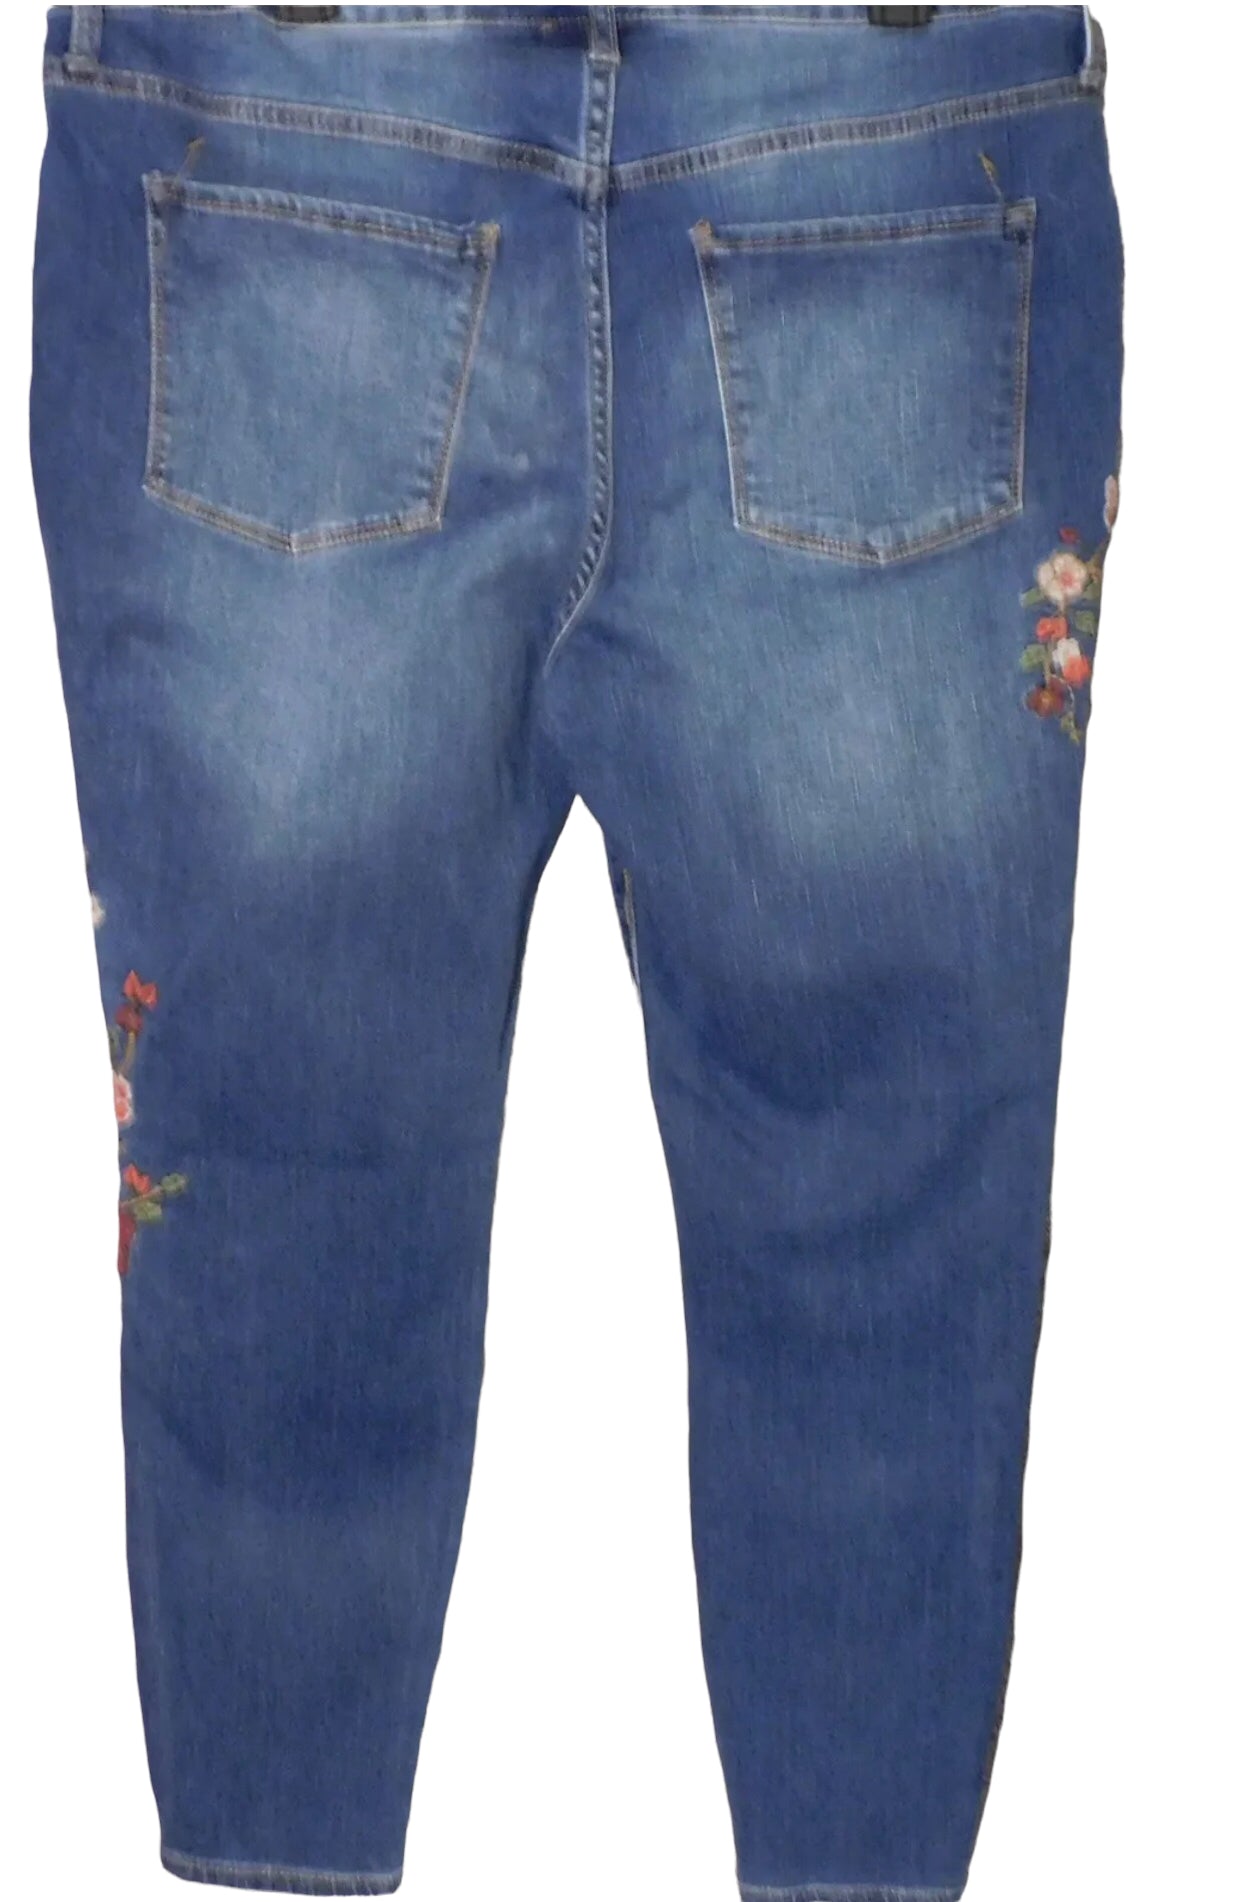 Women’s Denim Jeans w/Flowers - Variety Sales Etc.